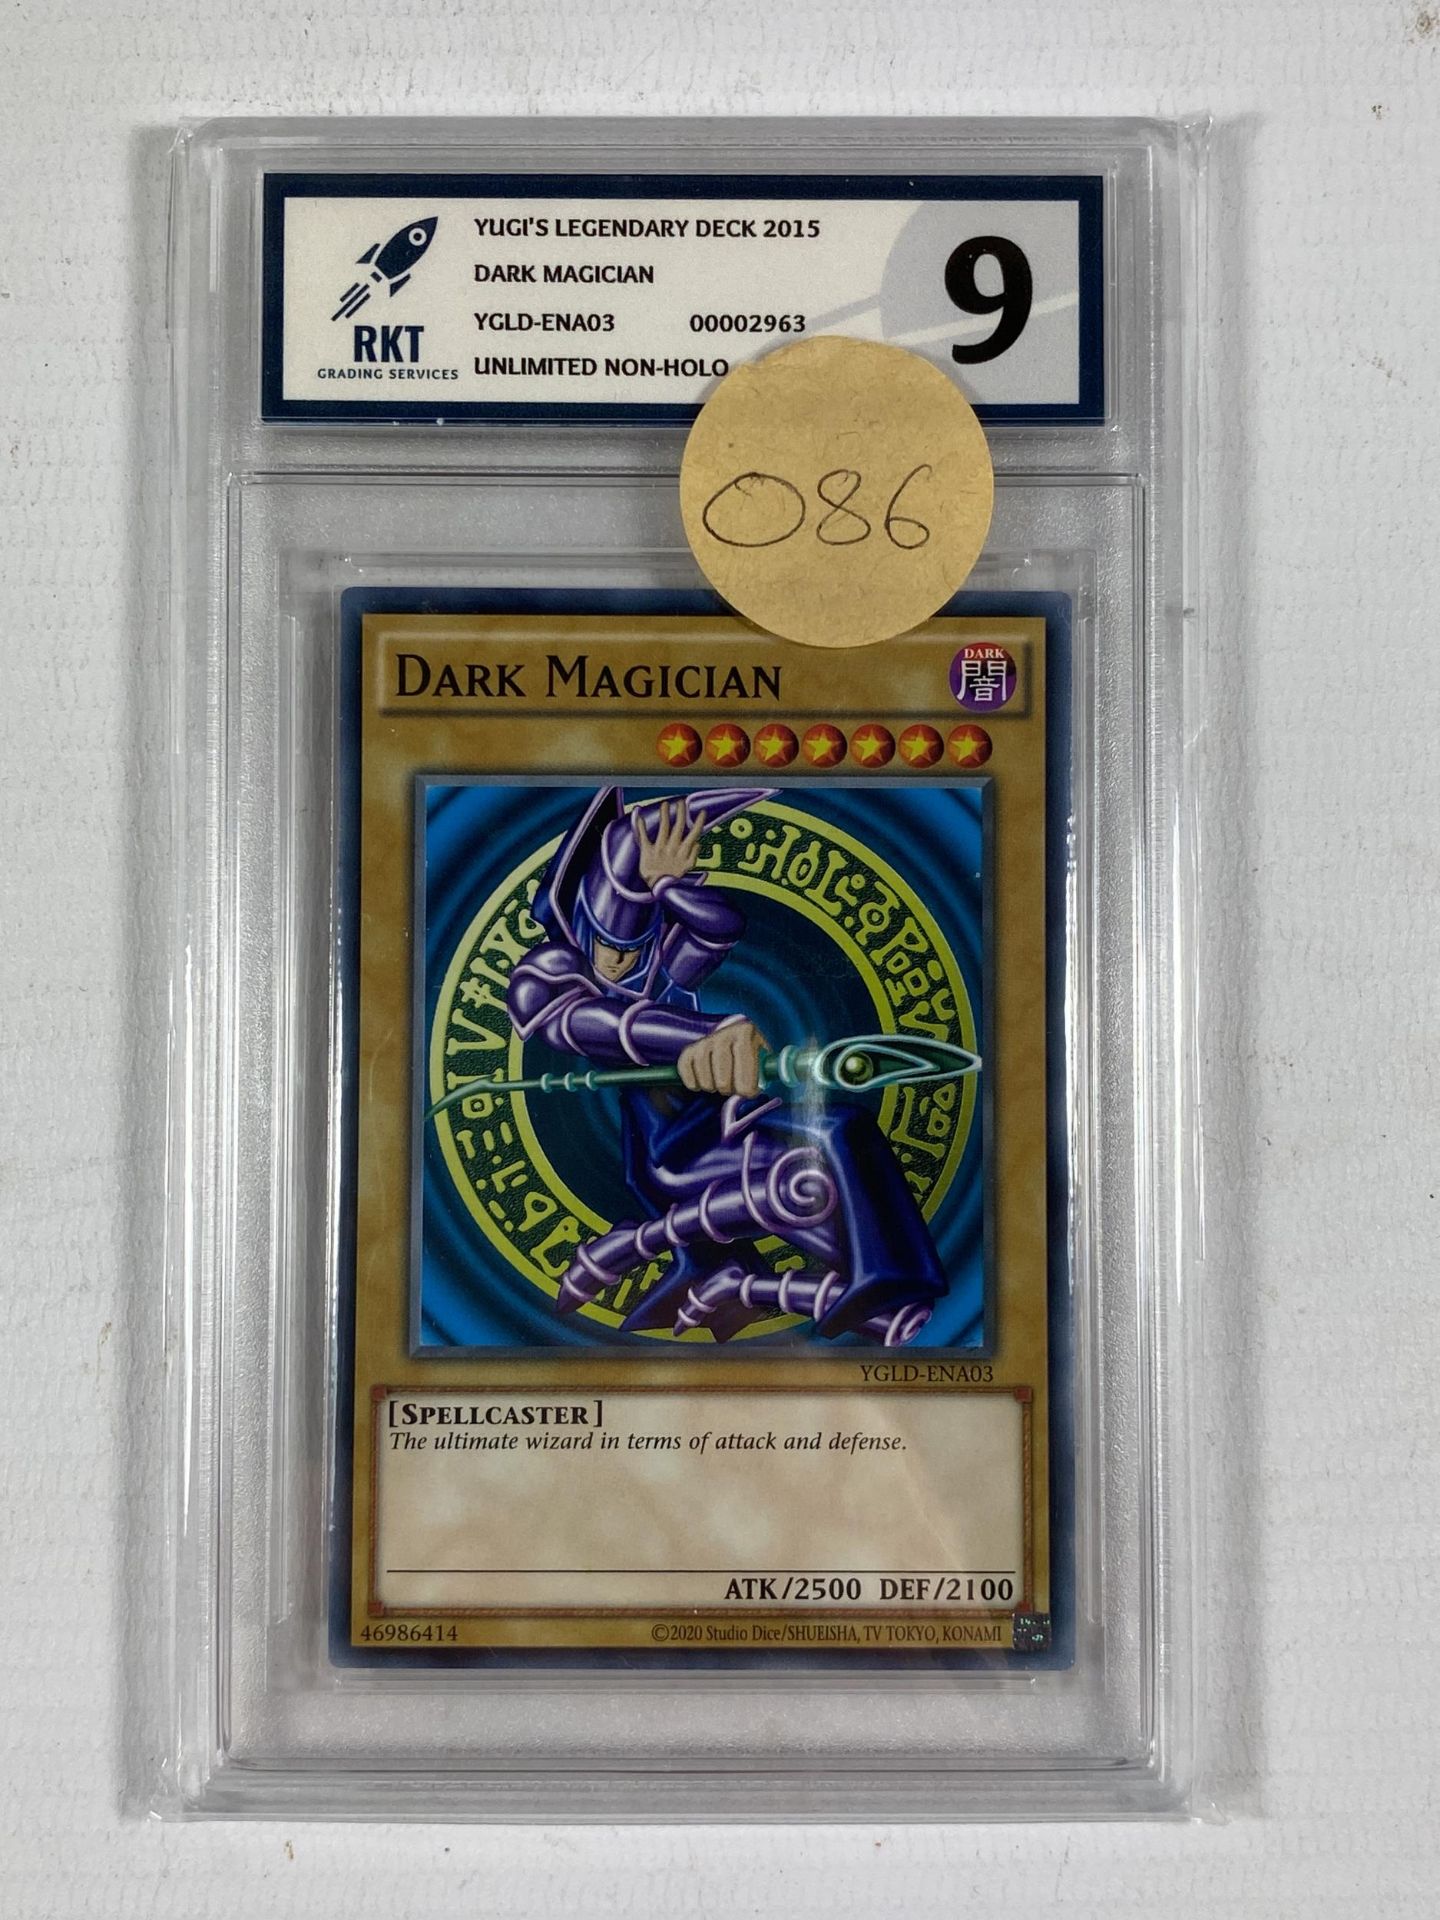 A YU-GI-OH DARK MAGICIAN CARD - RKT GRADED 9